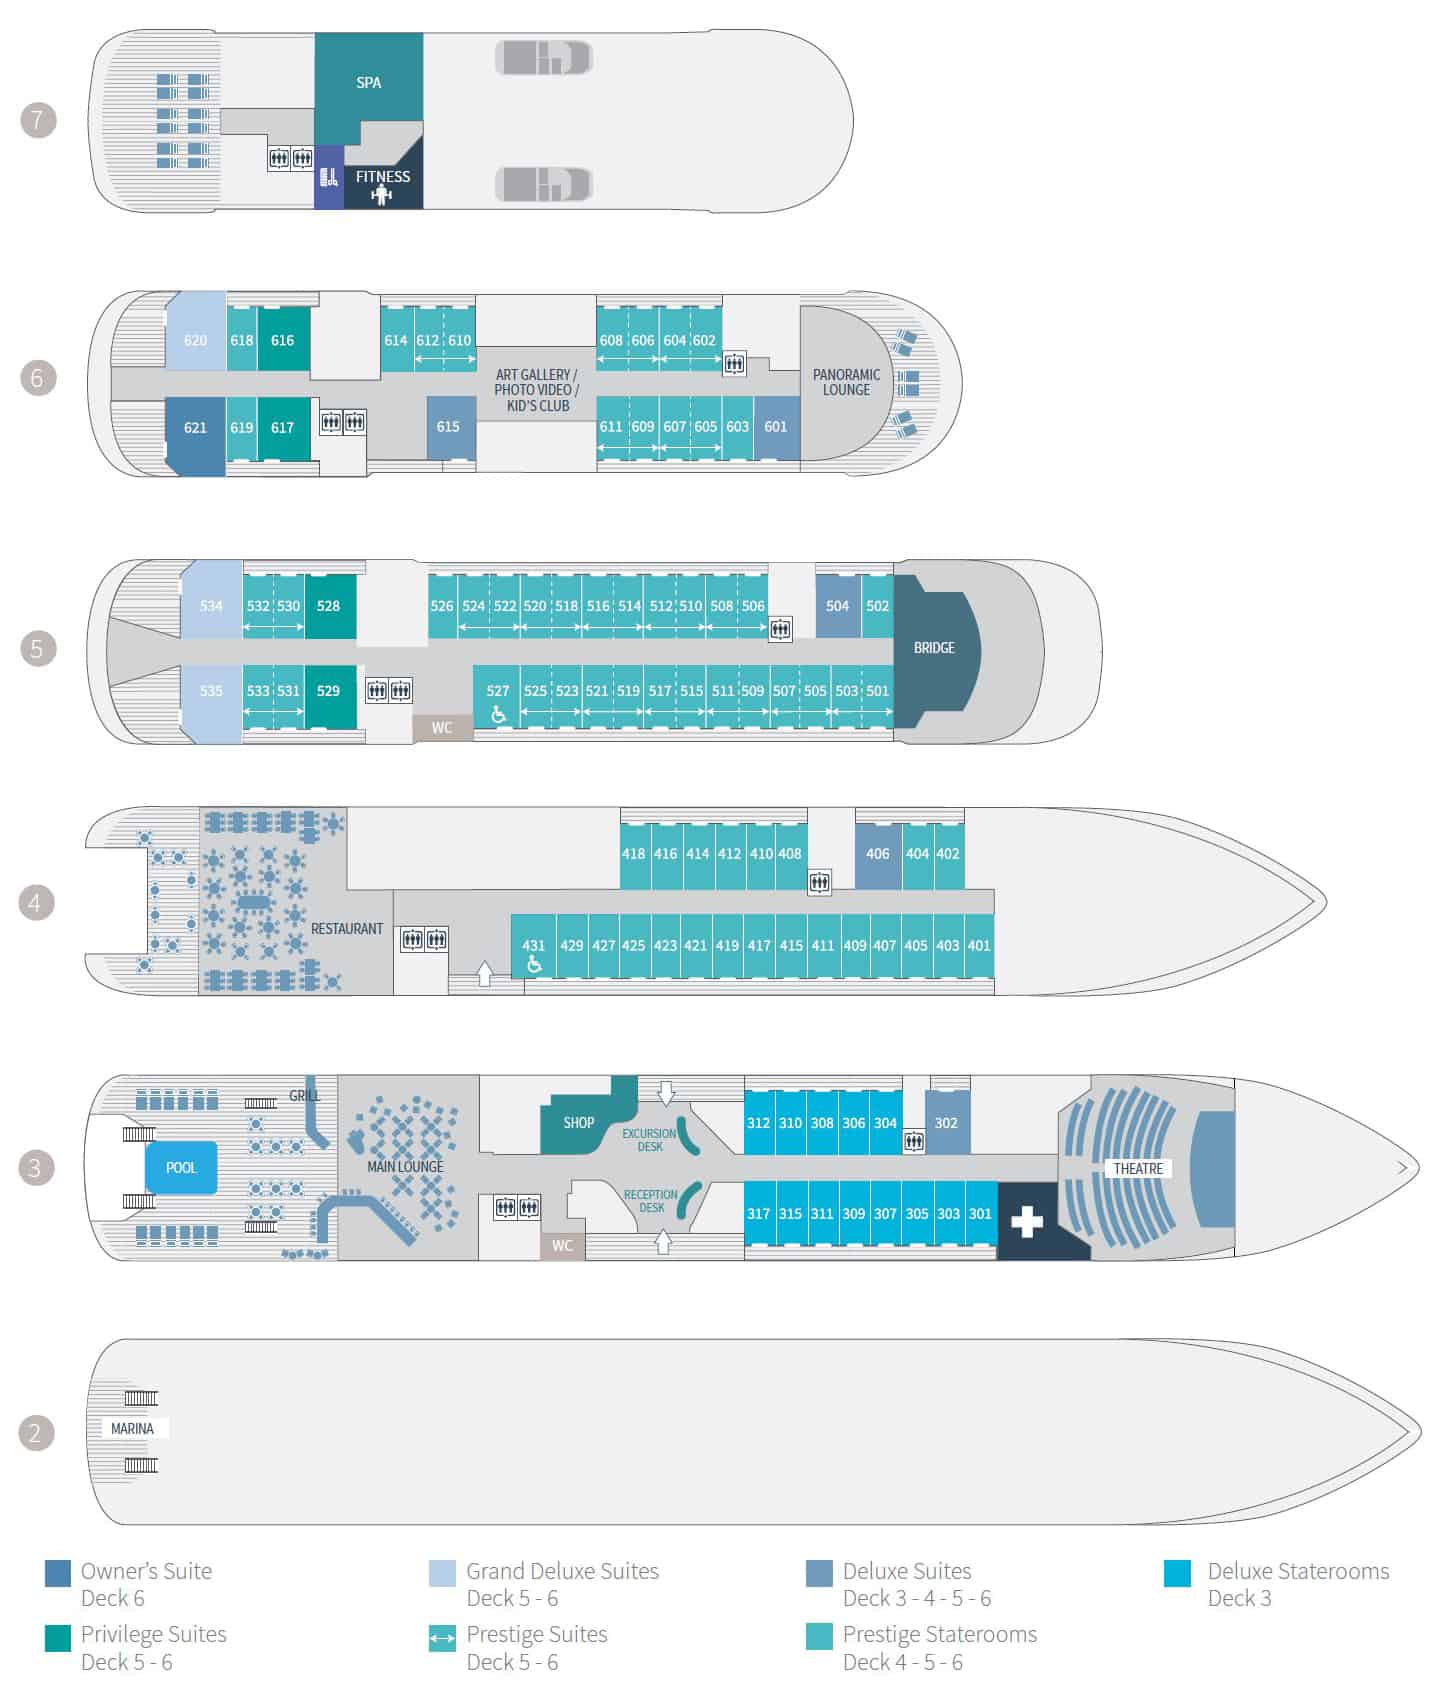 Deck plan of 184-guest Le Bougainville ship, showing 4 passenger decks with 88 staterooms & 4 suites.